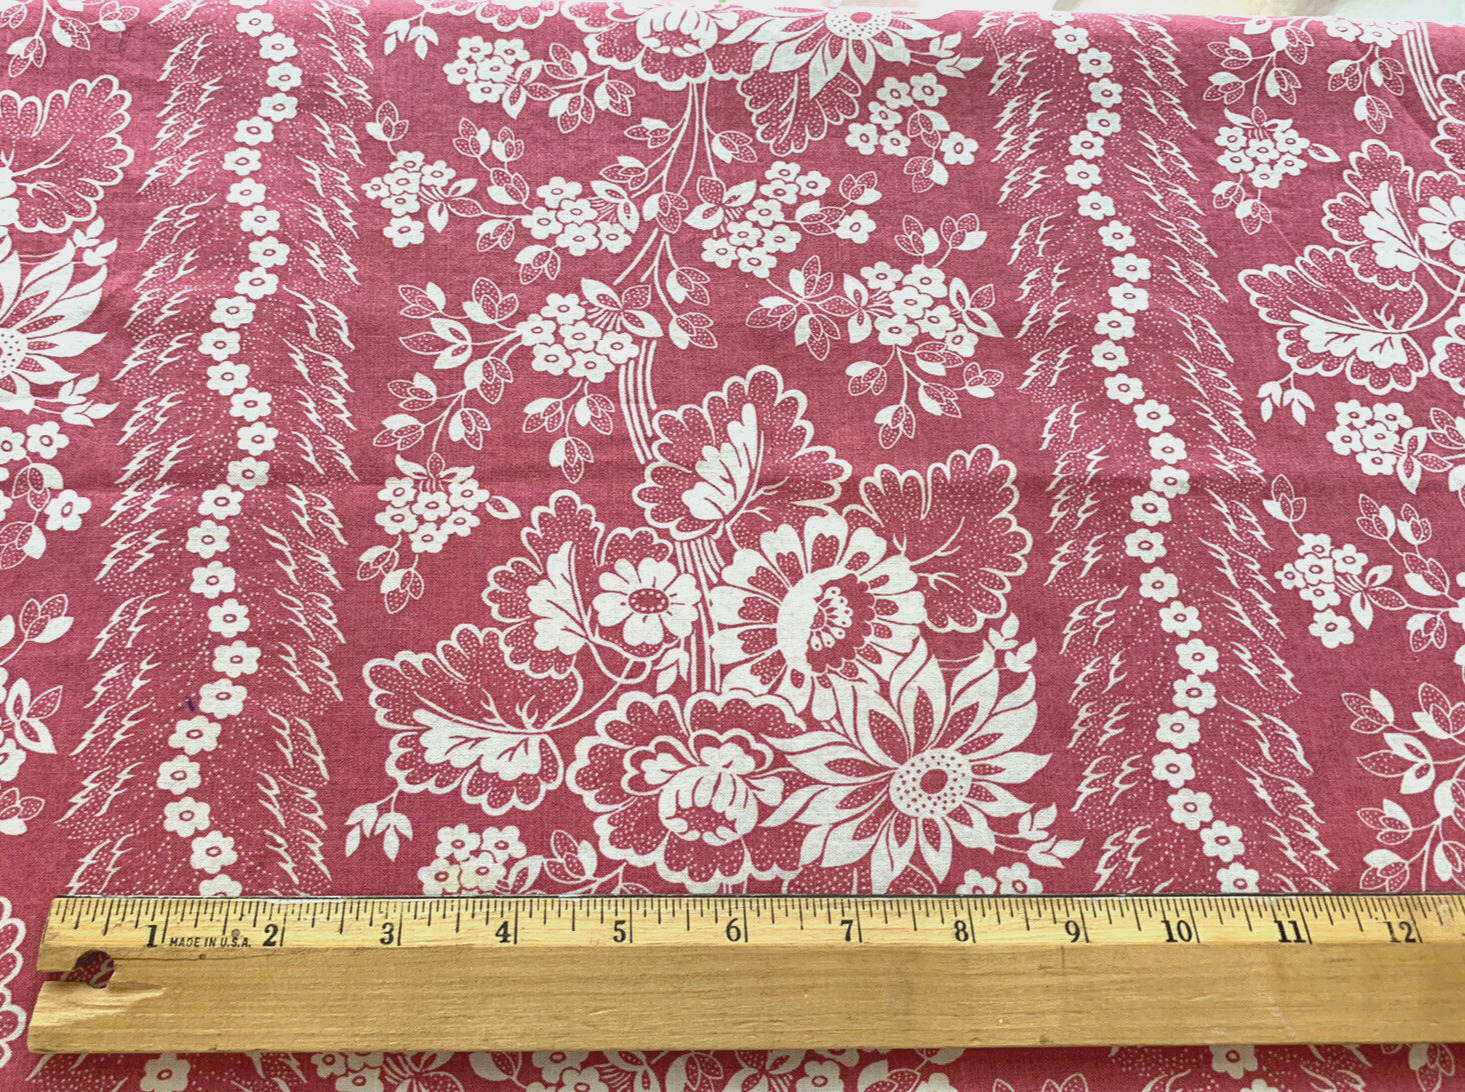 Vintage Pink & White Floral Print Cotton Fabric Panel 2 Yards